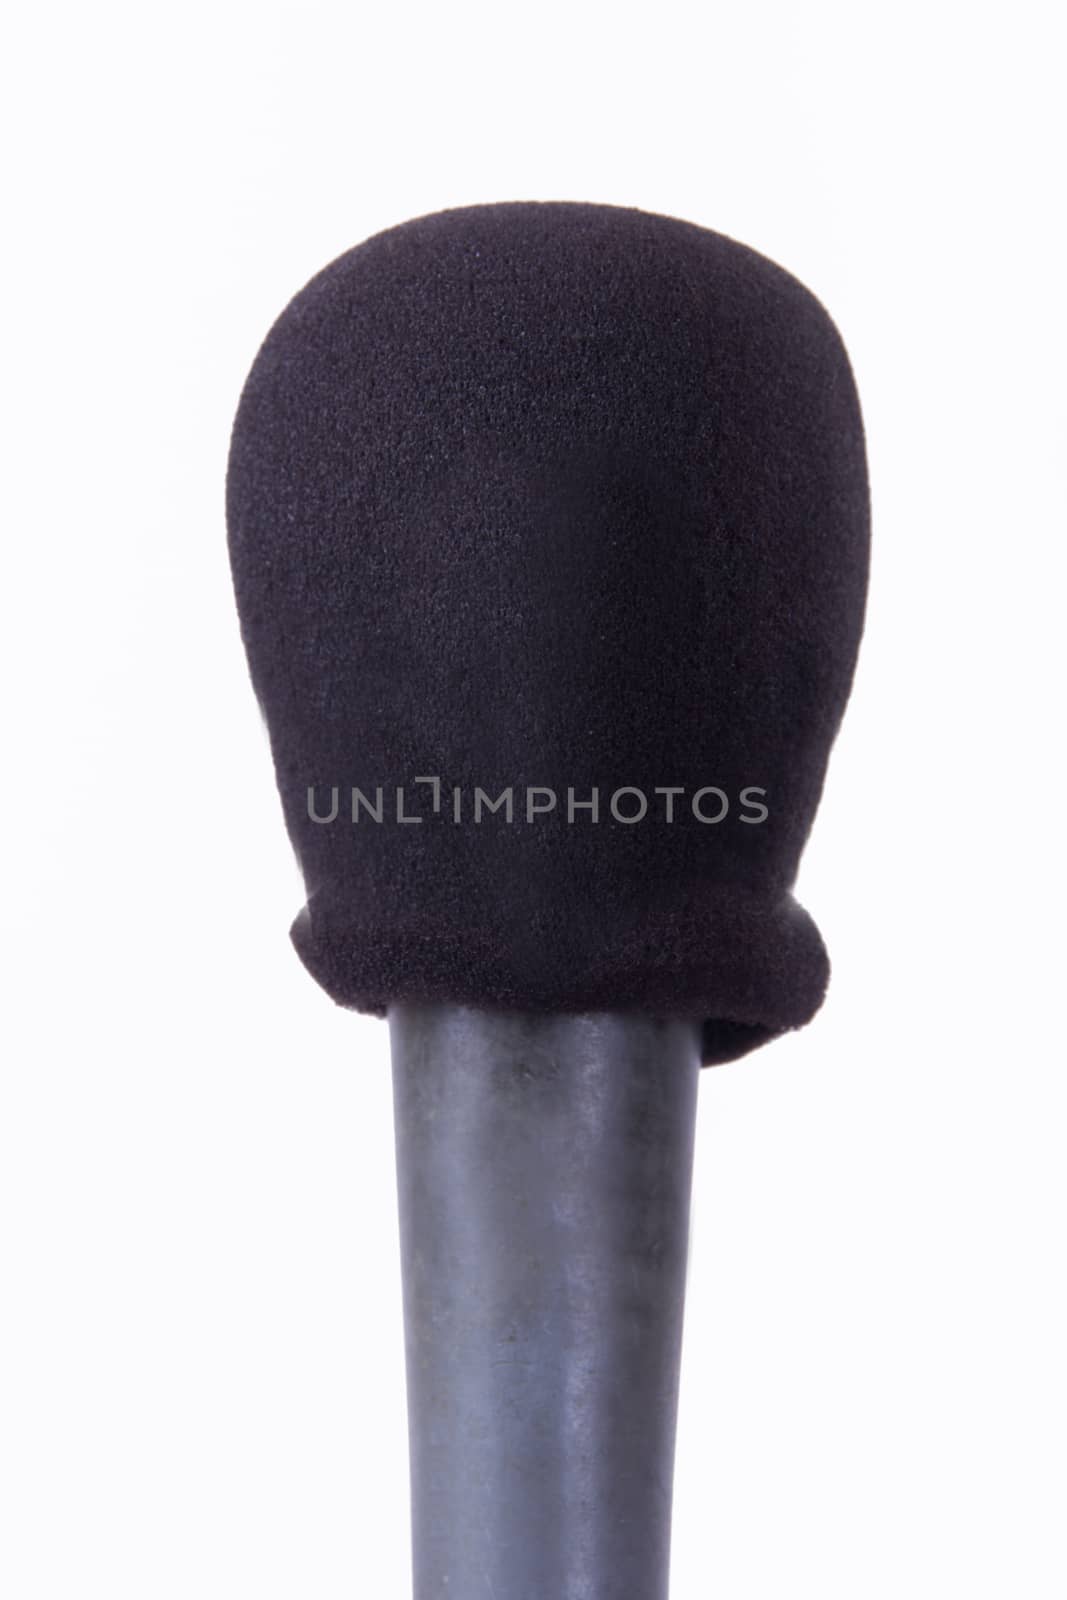 Black Microphone by niglaynike